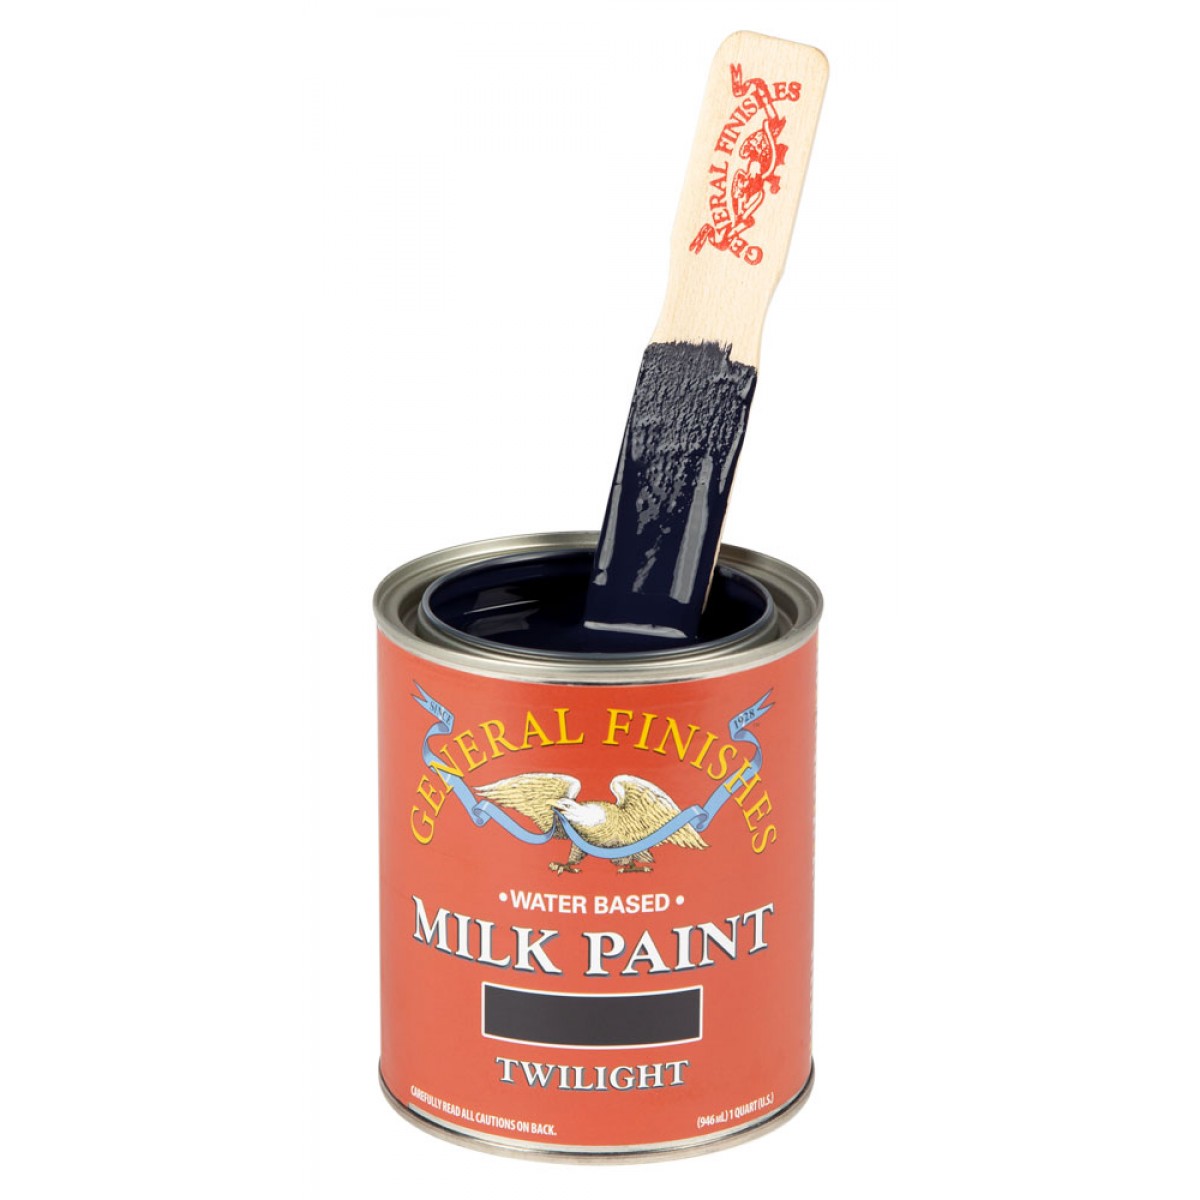 General Finishes Twilight Milk Paint